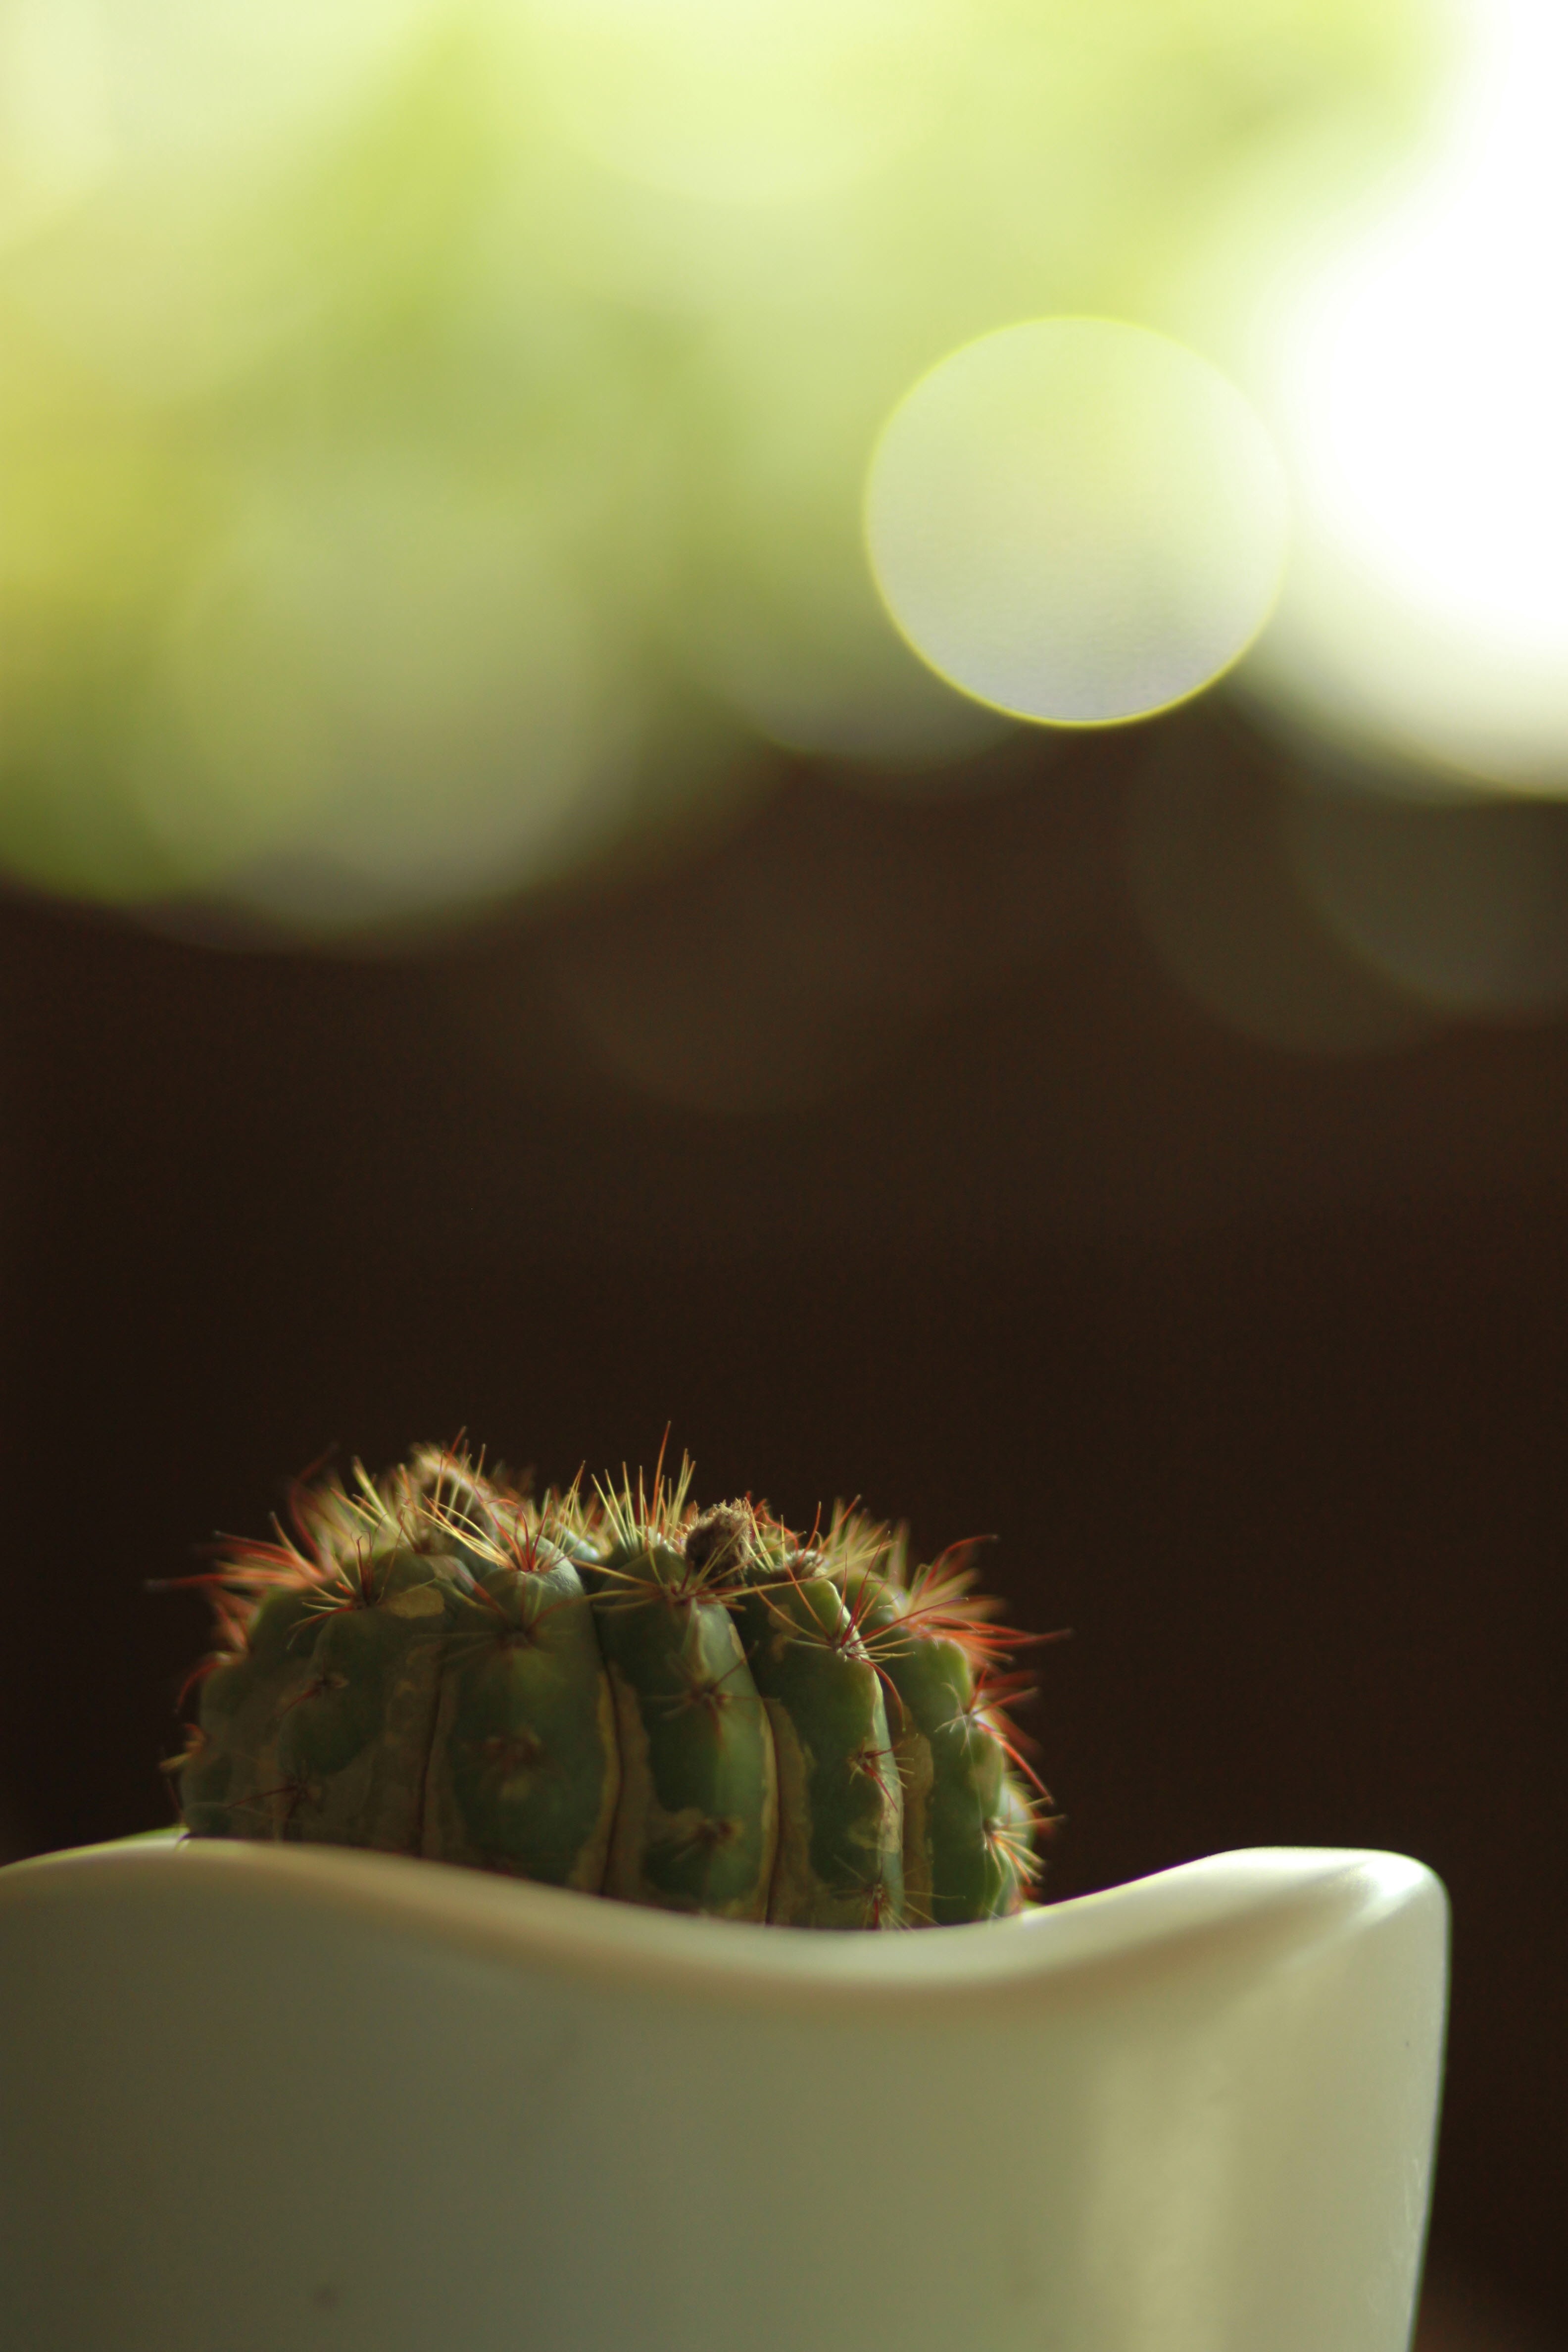 121888 descargar imagen cactus, flores, de cerca, primer plano, mordaz, espinoso, cacto, bokeh, boquet, maceta, olla: fondos de pantalla y protectores de pantalla gratis